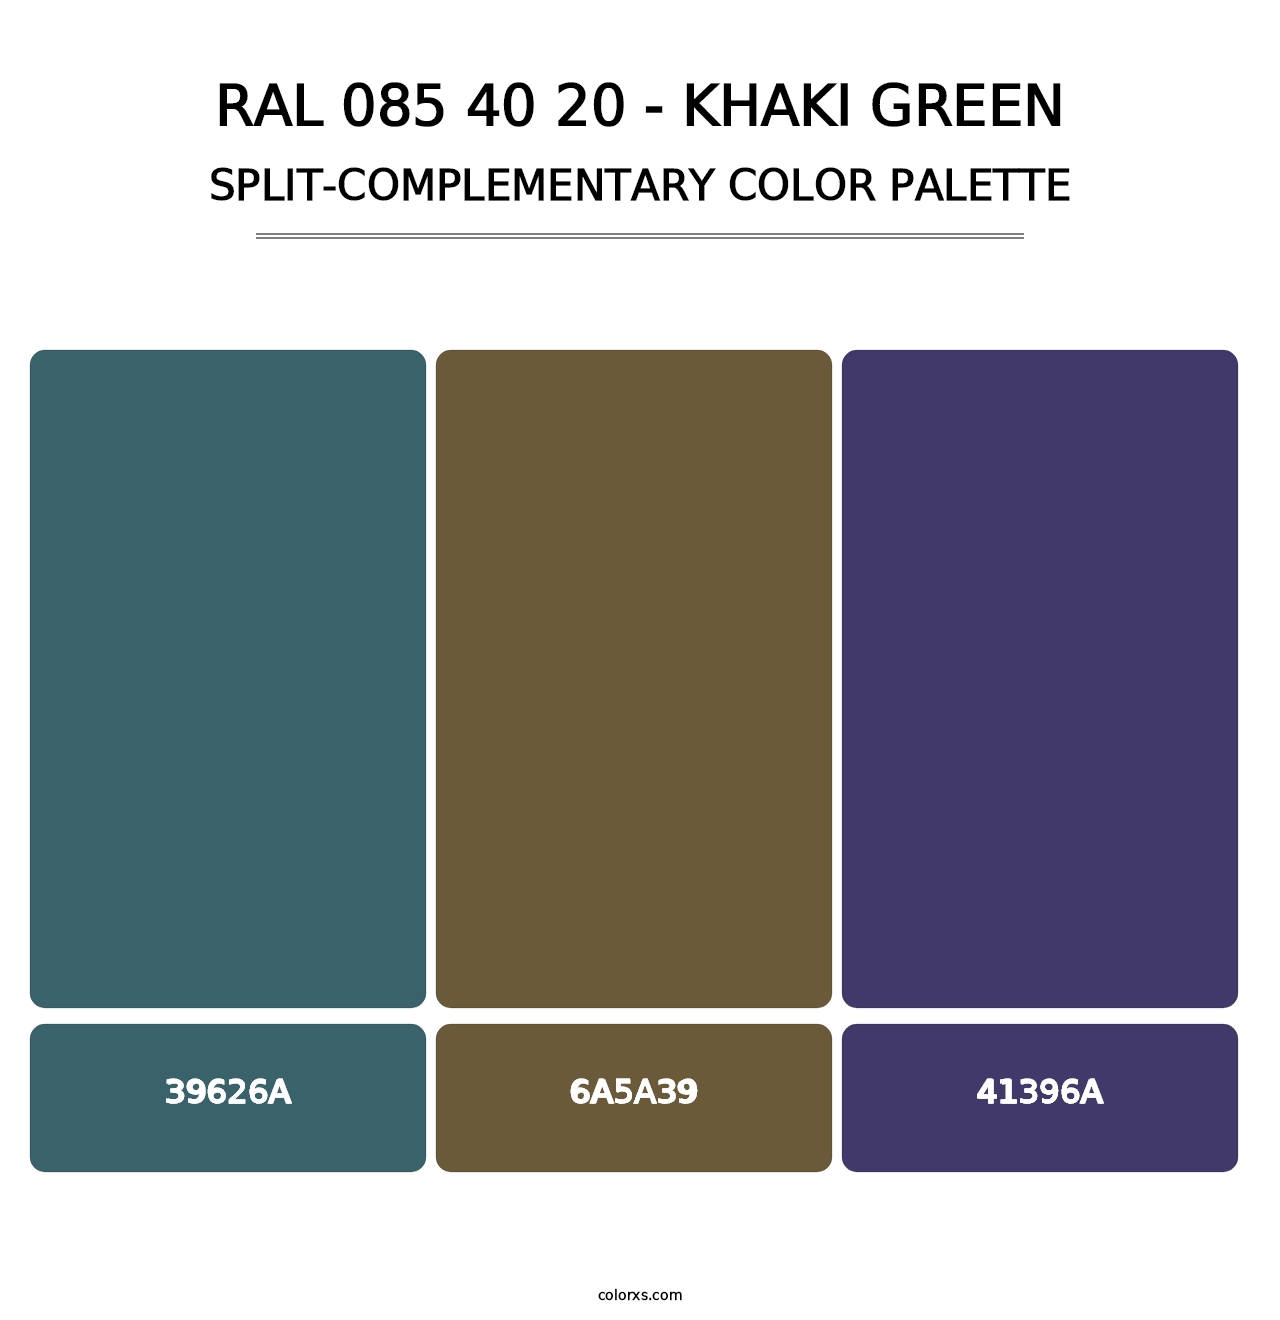 RAL 085 40 20 - Khaki Green - Split-Complementary Color Palette